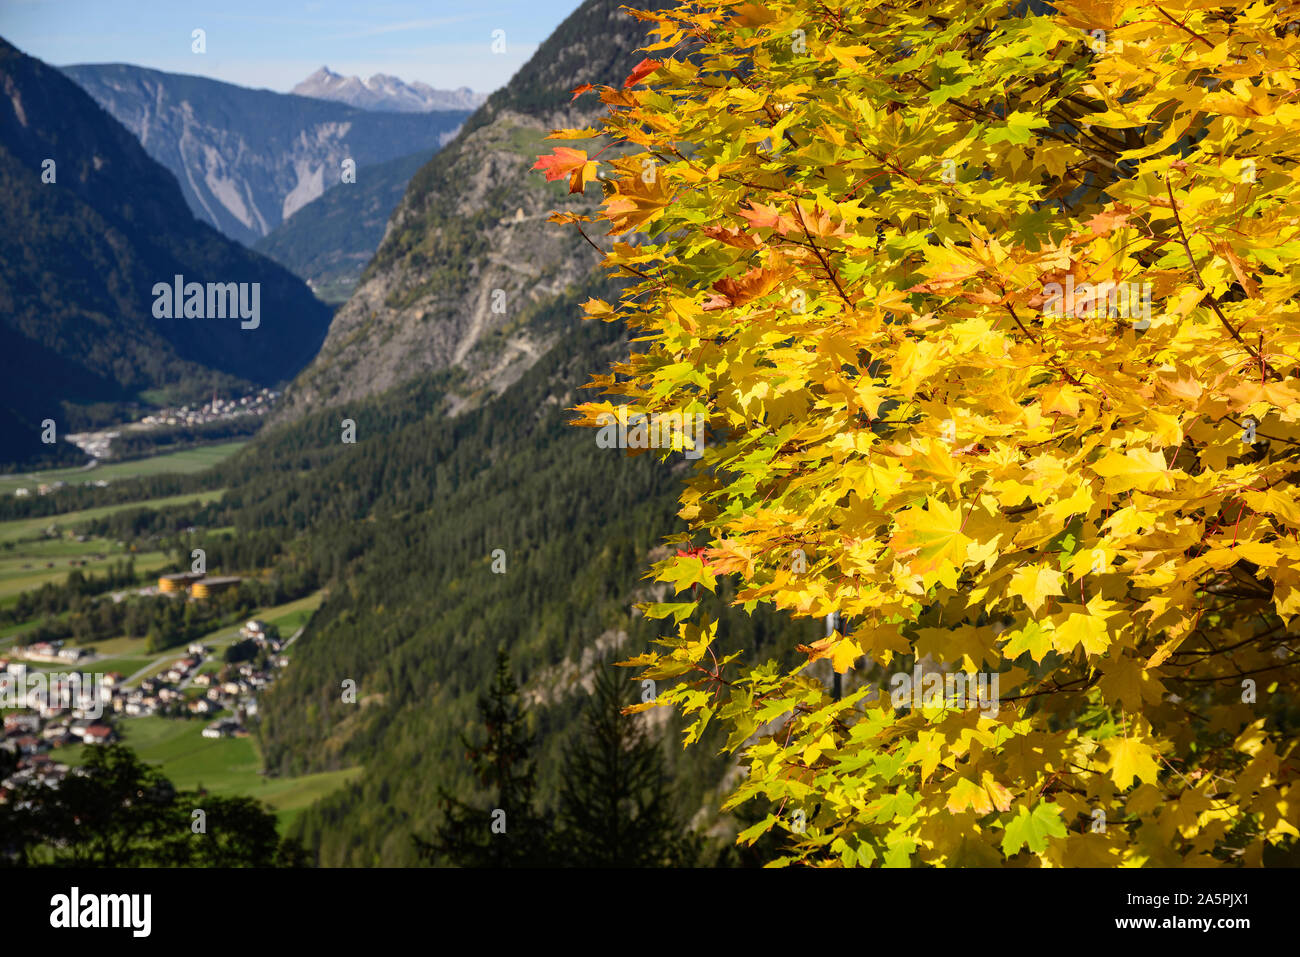 Grösste Der Wasserfall Tirols, Stuibenwasserfall im Ötztal, Tirol, Östereich Foto Stock